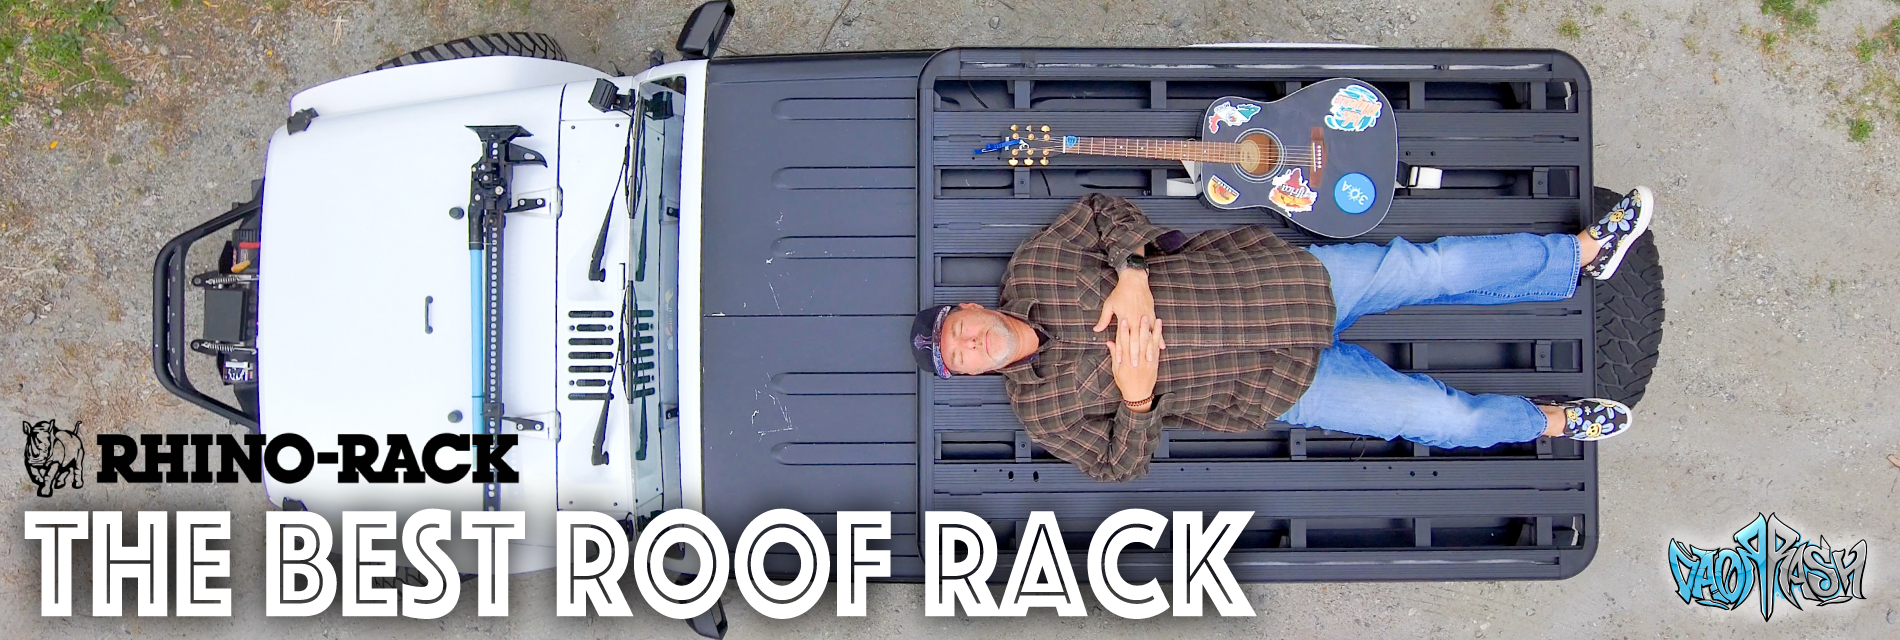 rhino rack backbone platform roof rack